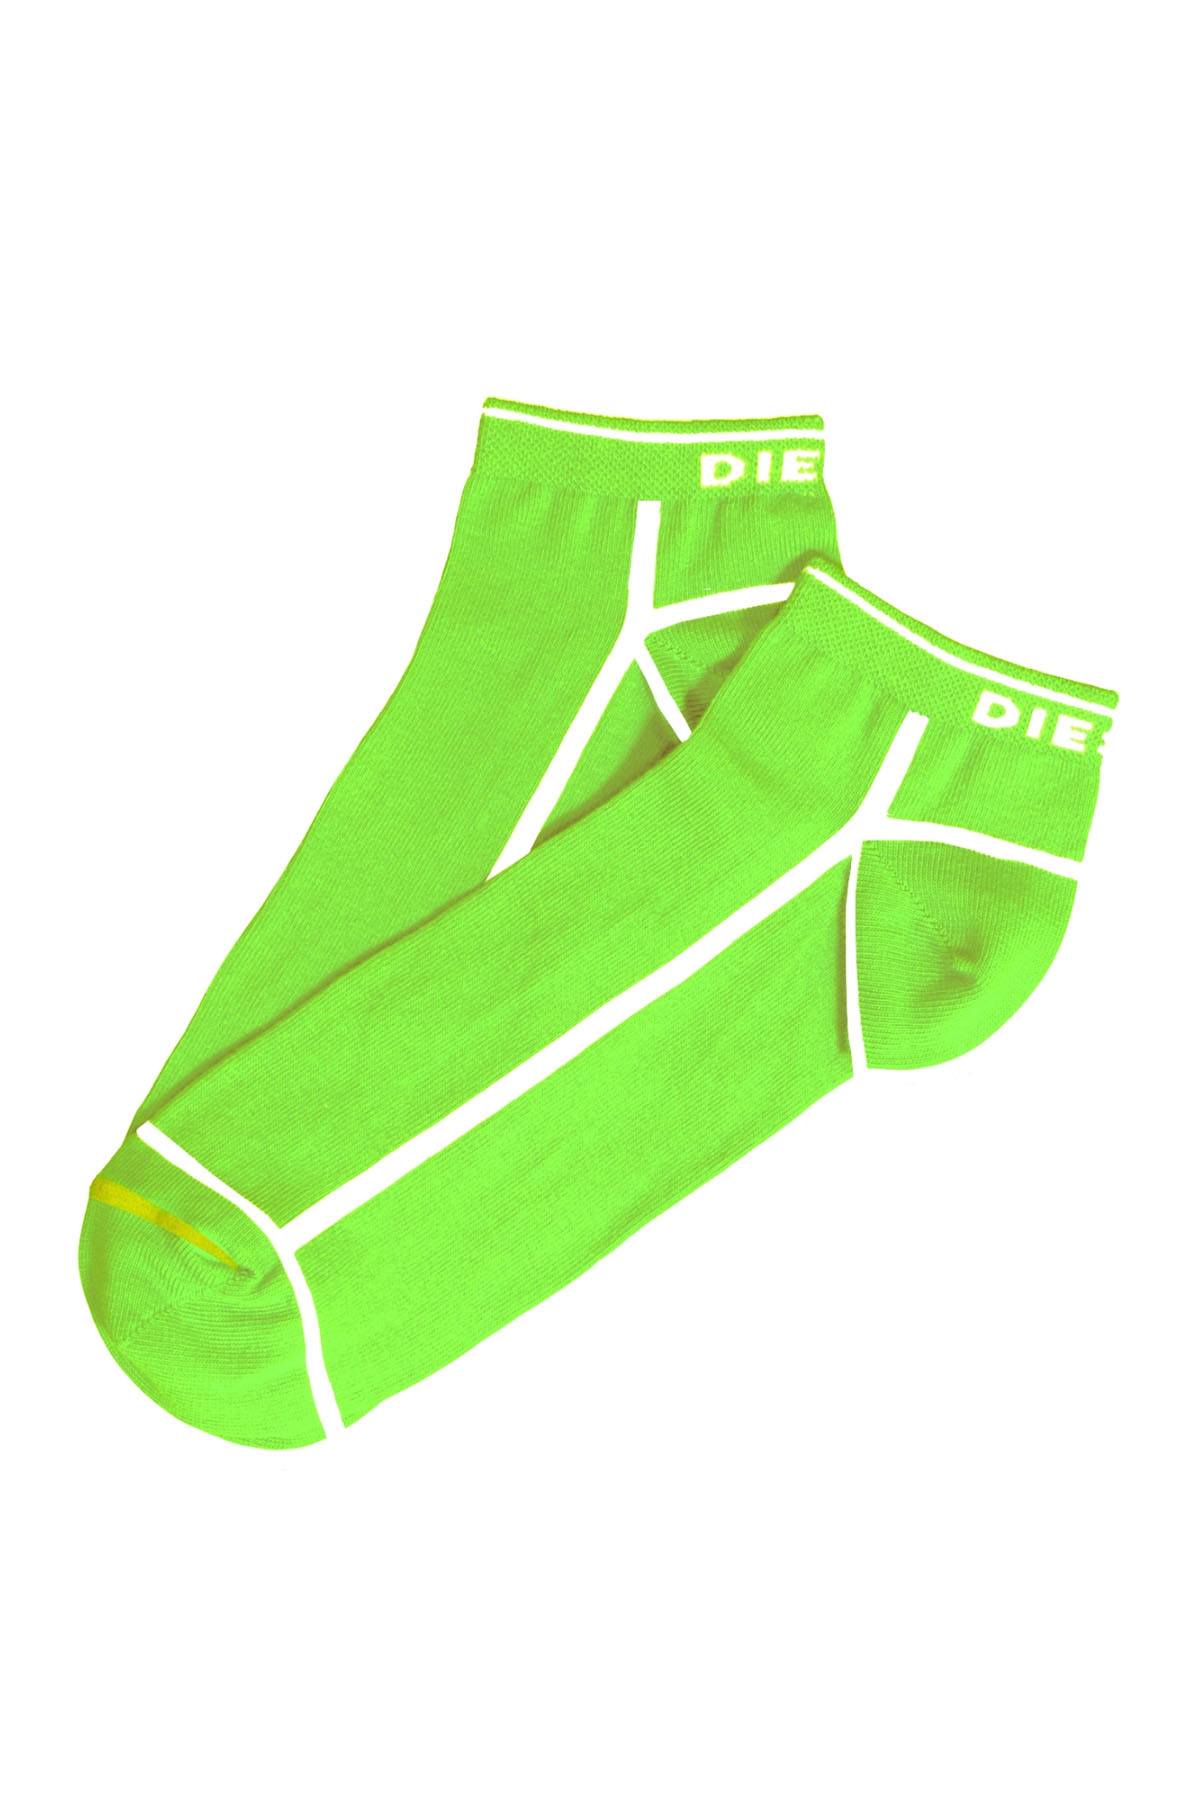 Diesel Green Low-Shot Socks